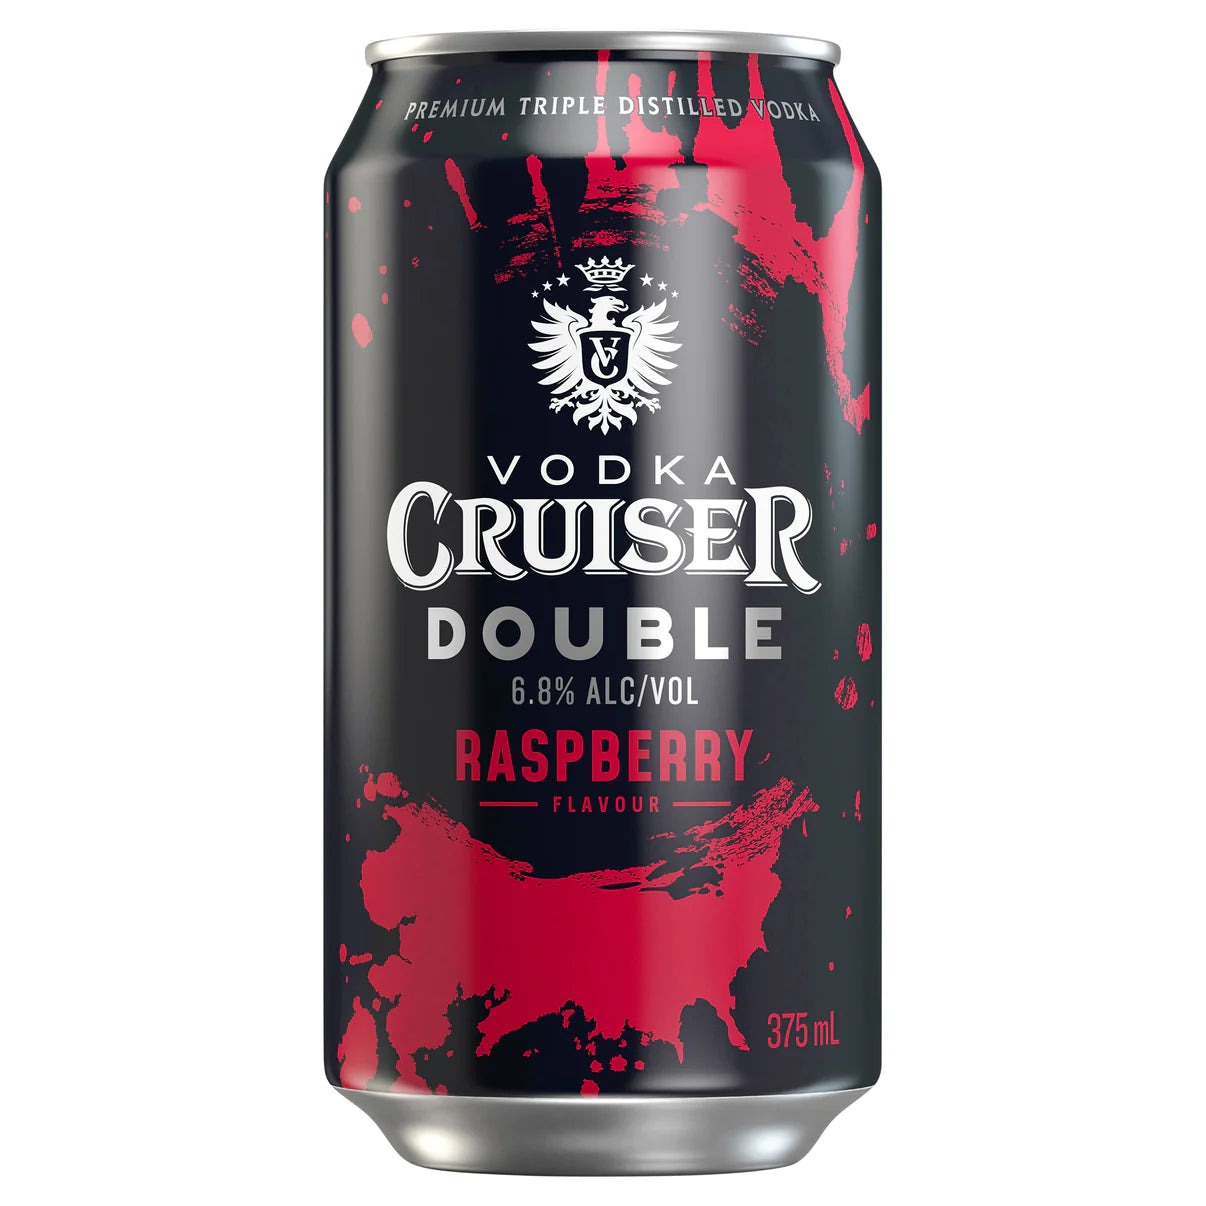 Vodka Cruiser Double Raspberry 375ml can